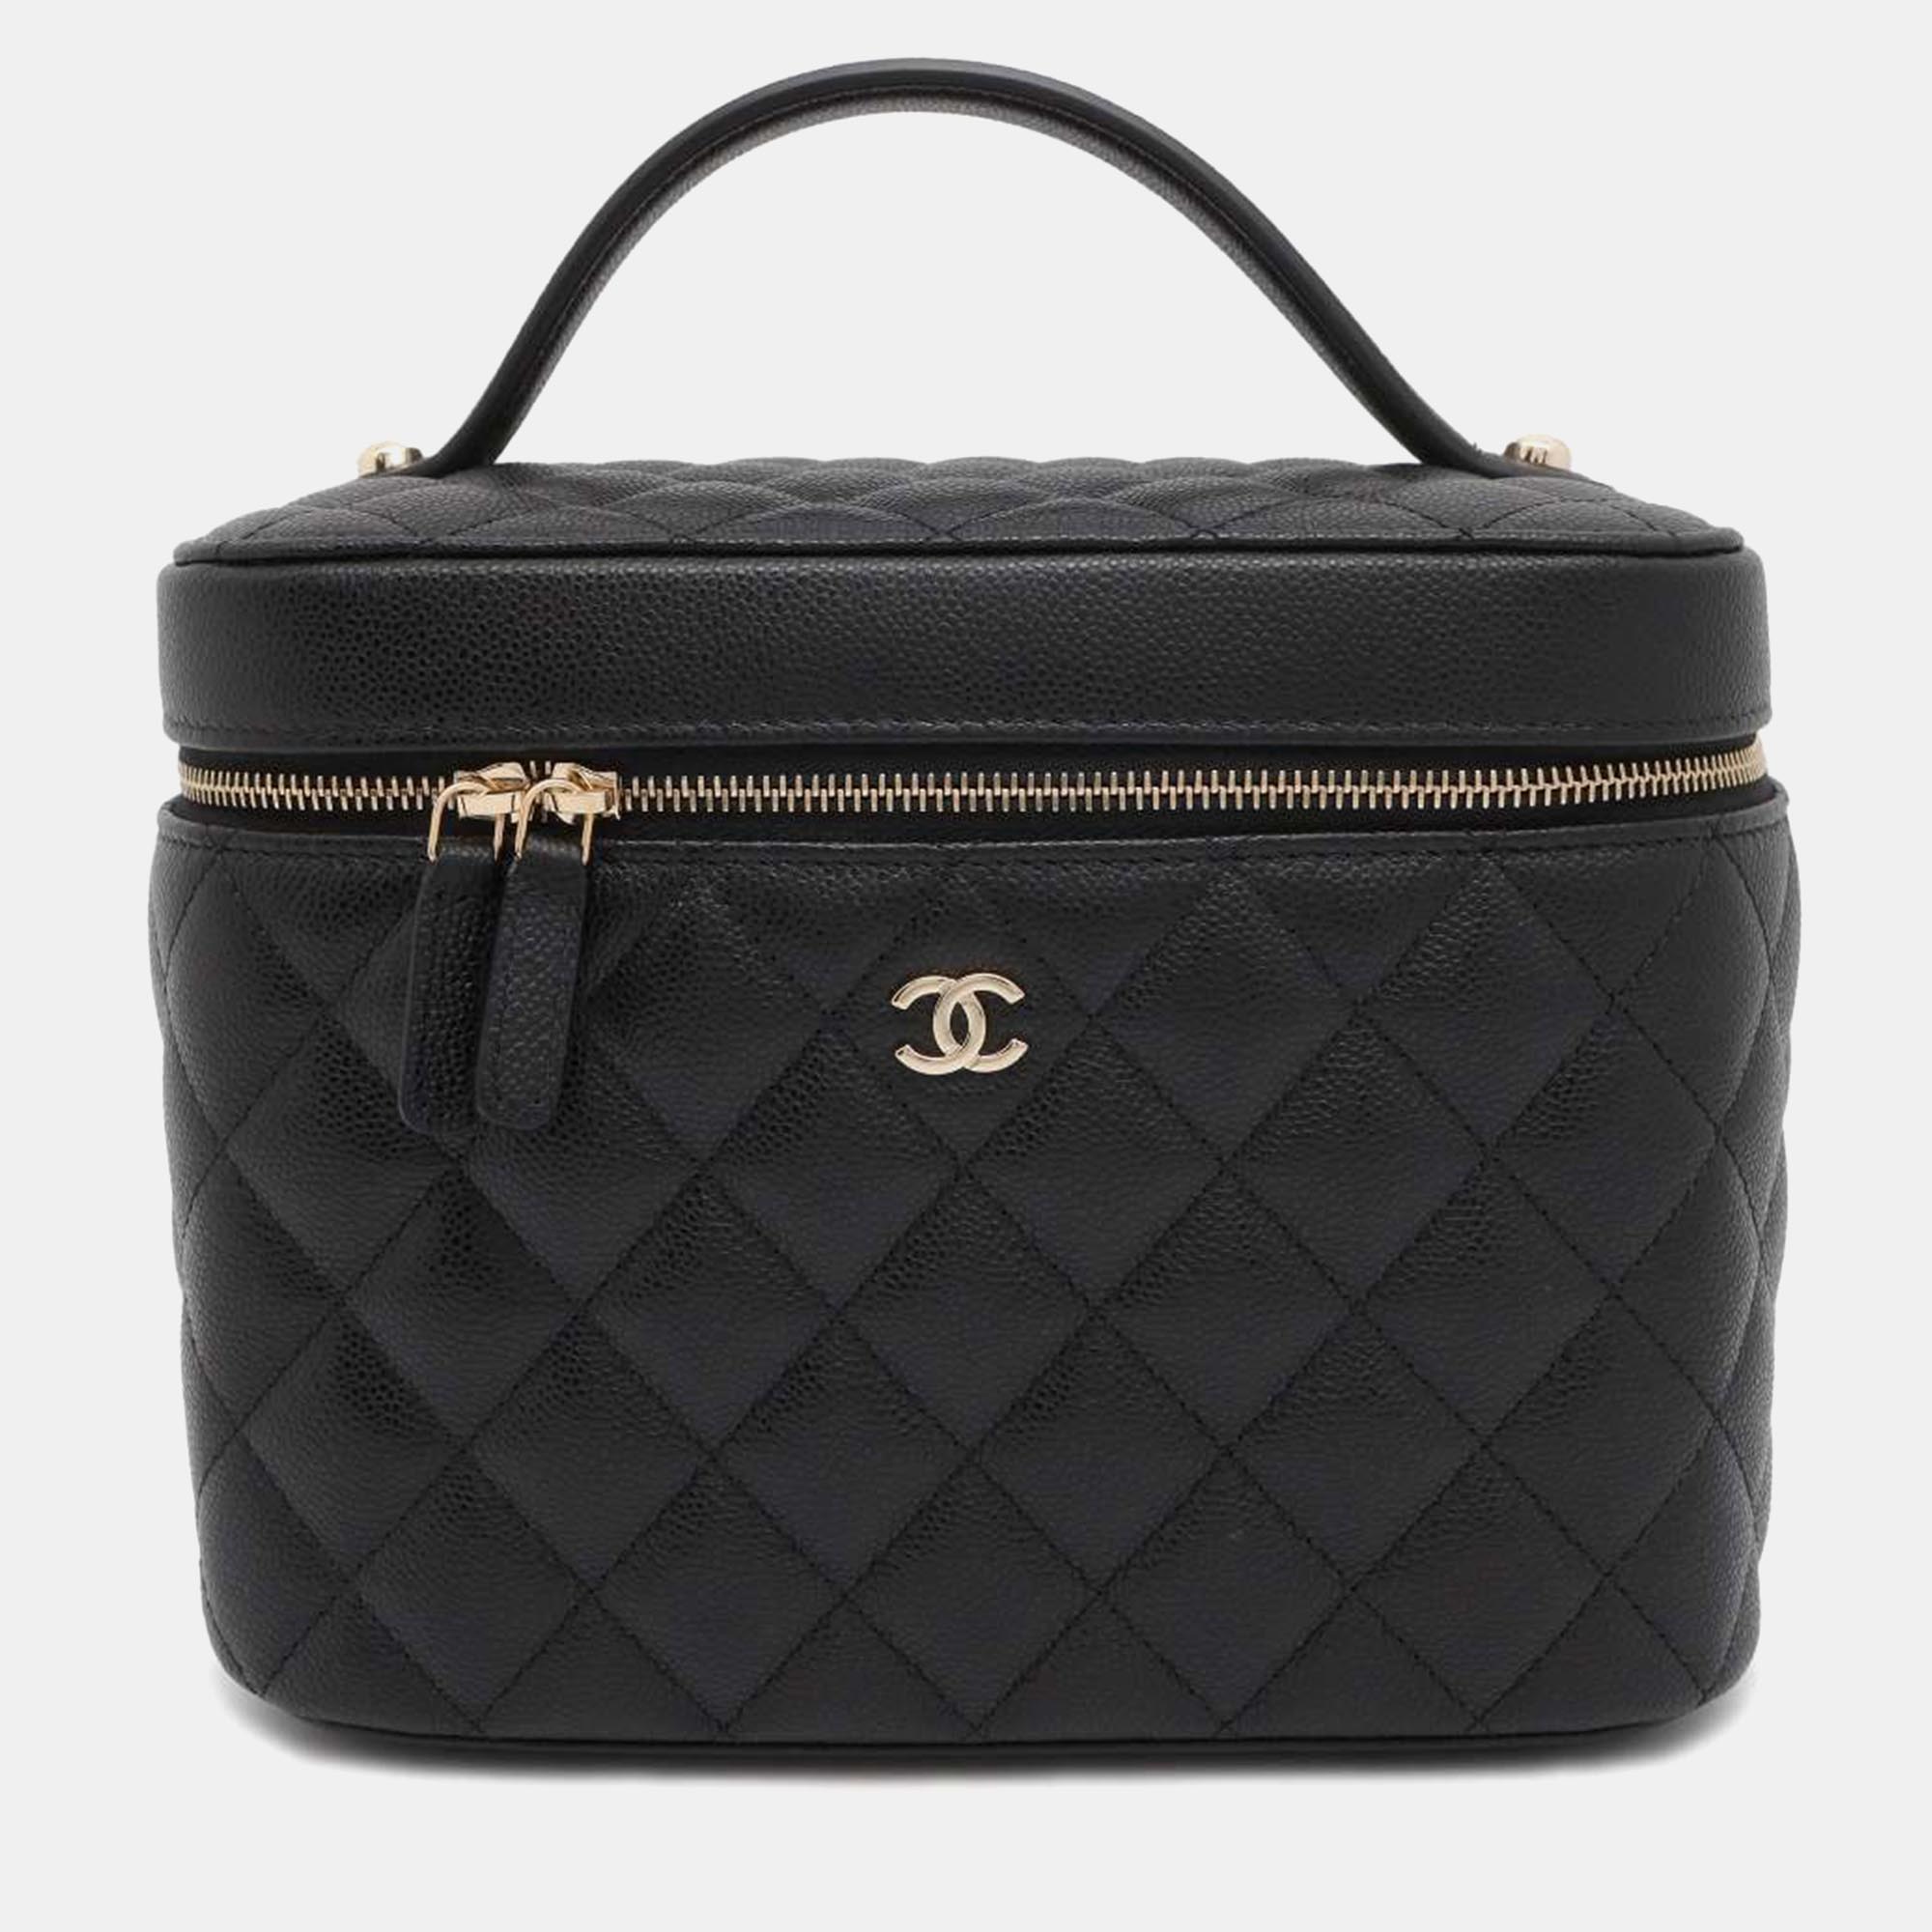 

Chanel Black Leather Caviar Vanity Case